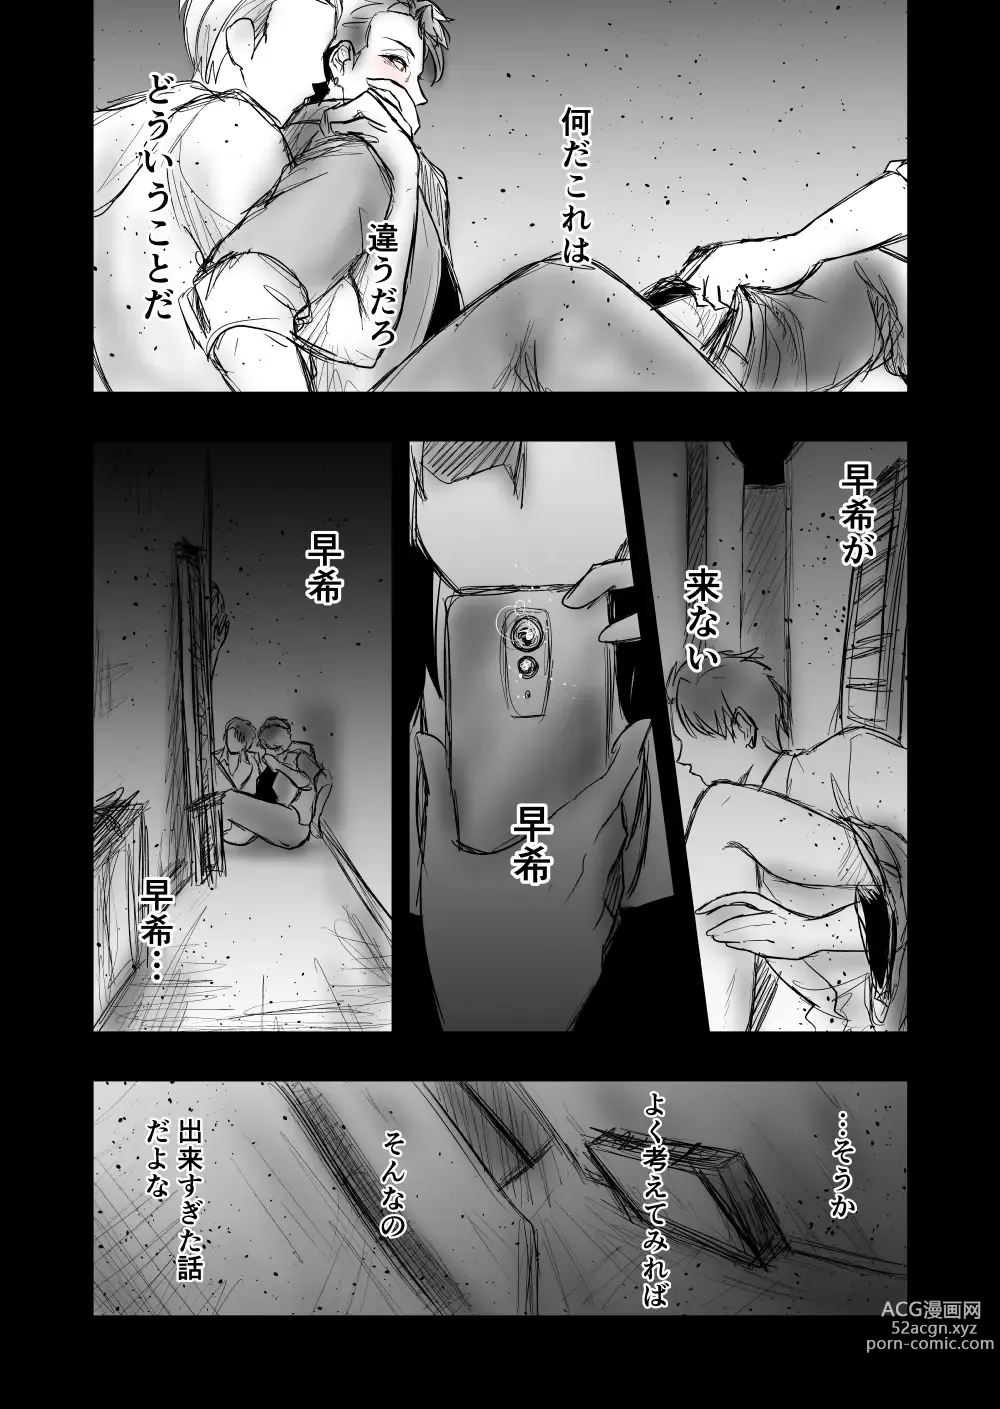 Page 5 of doujinshi 4